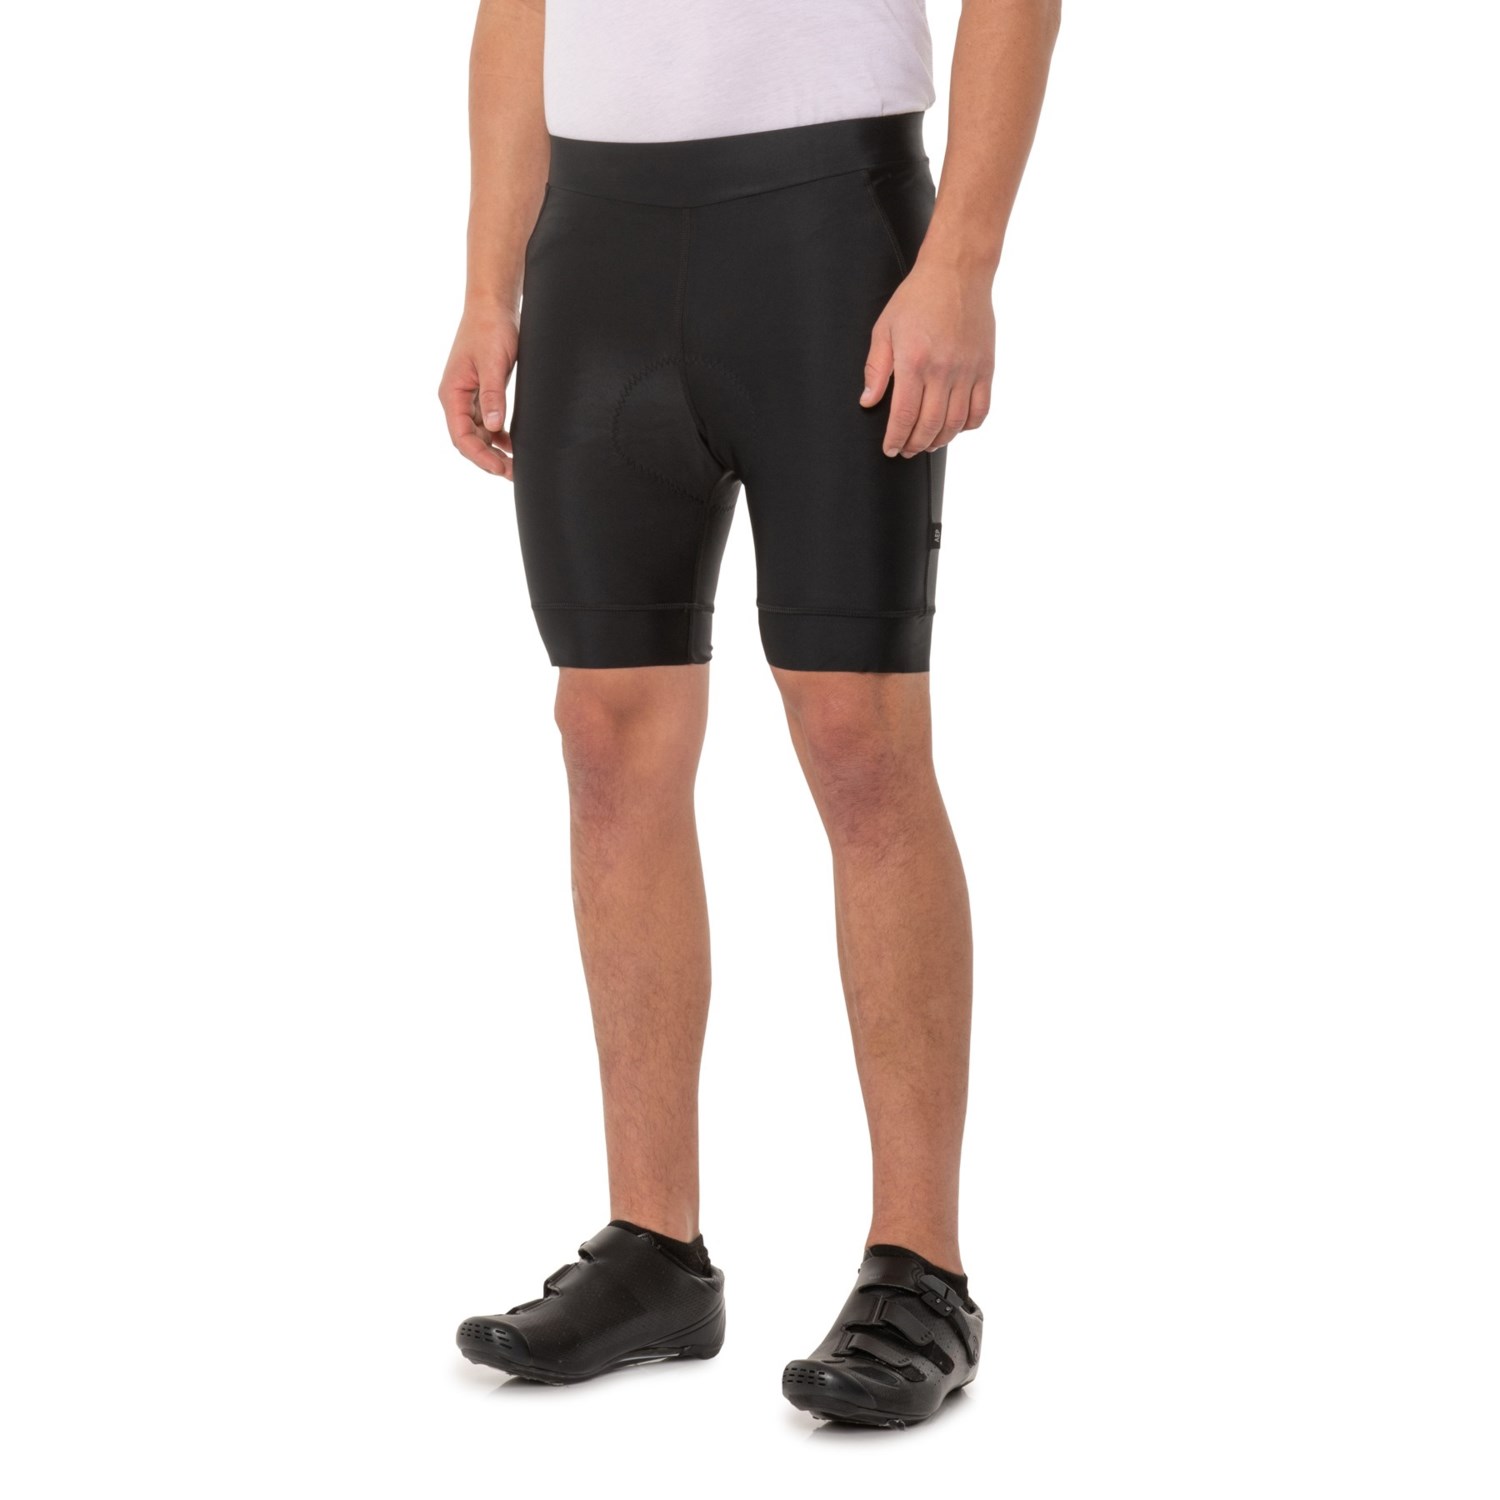 Dare2b Expositor II Bike Shorts (For Men) - Save 70%